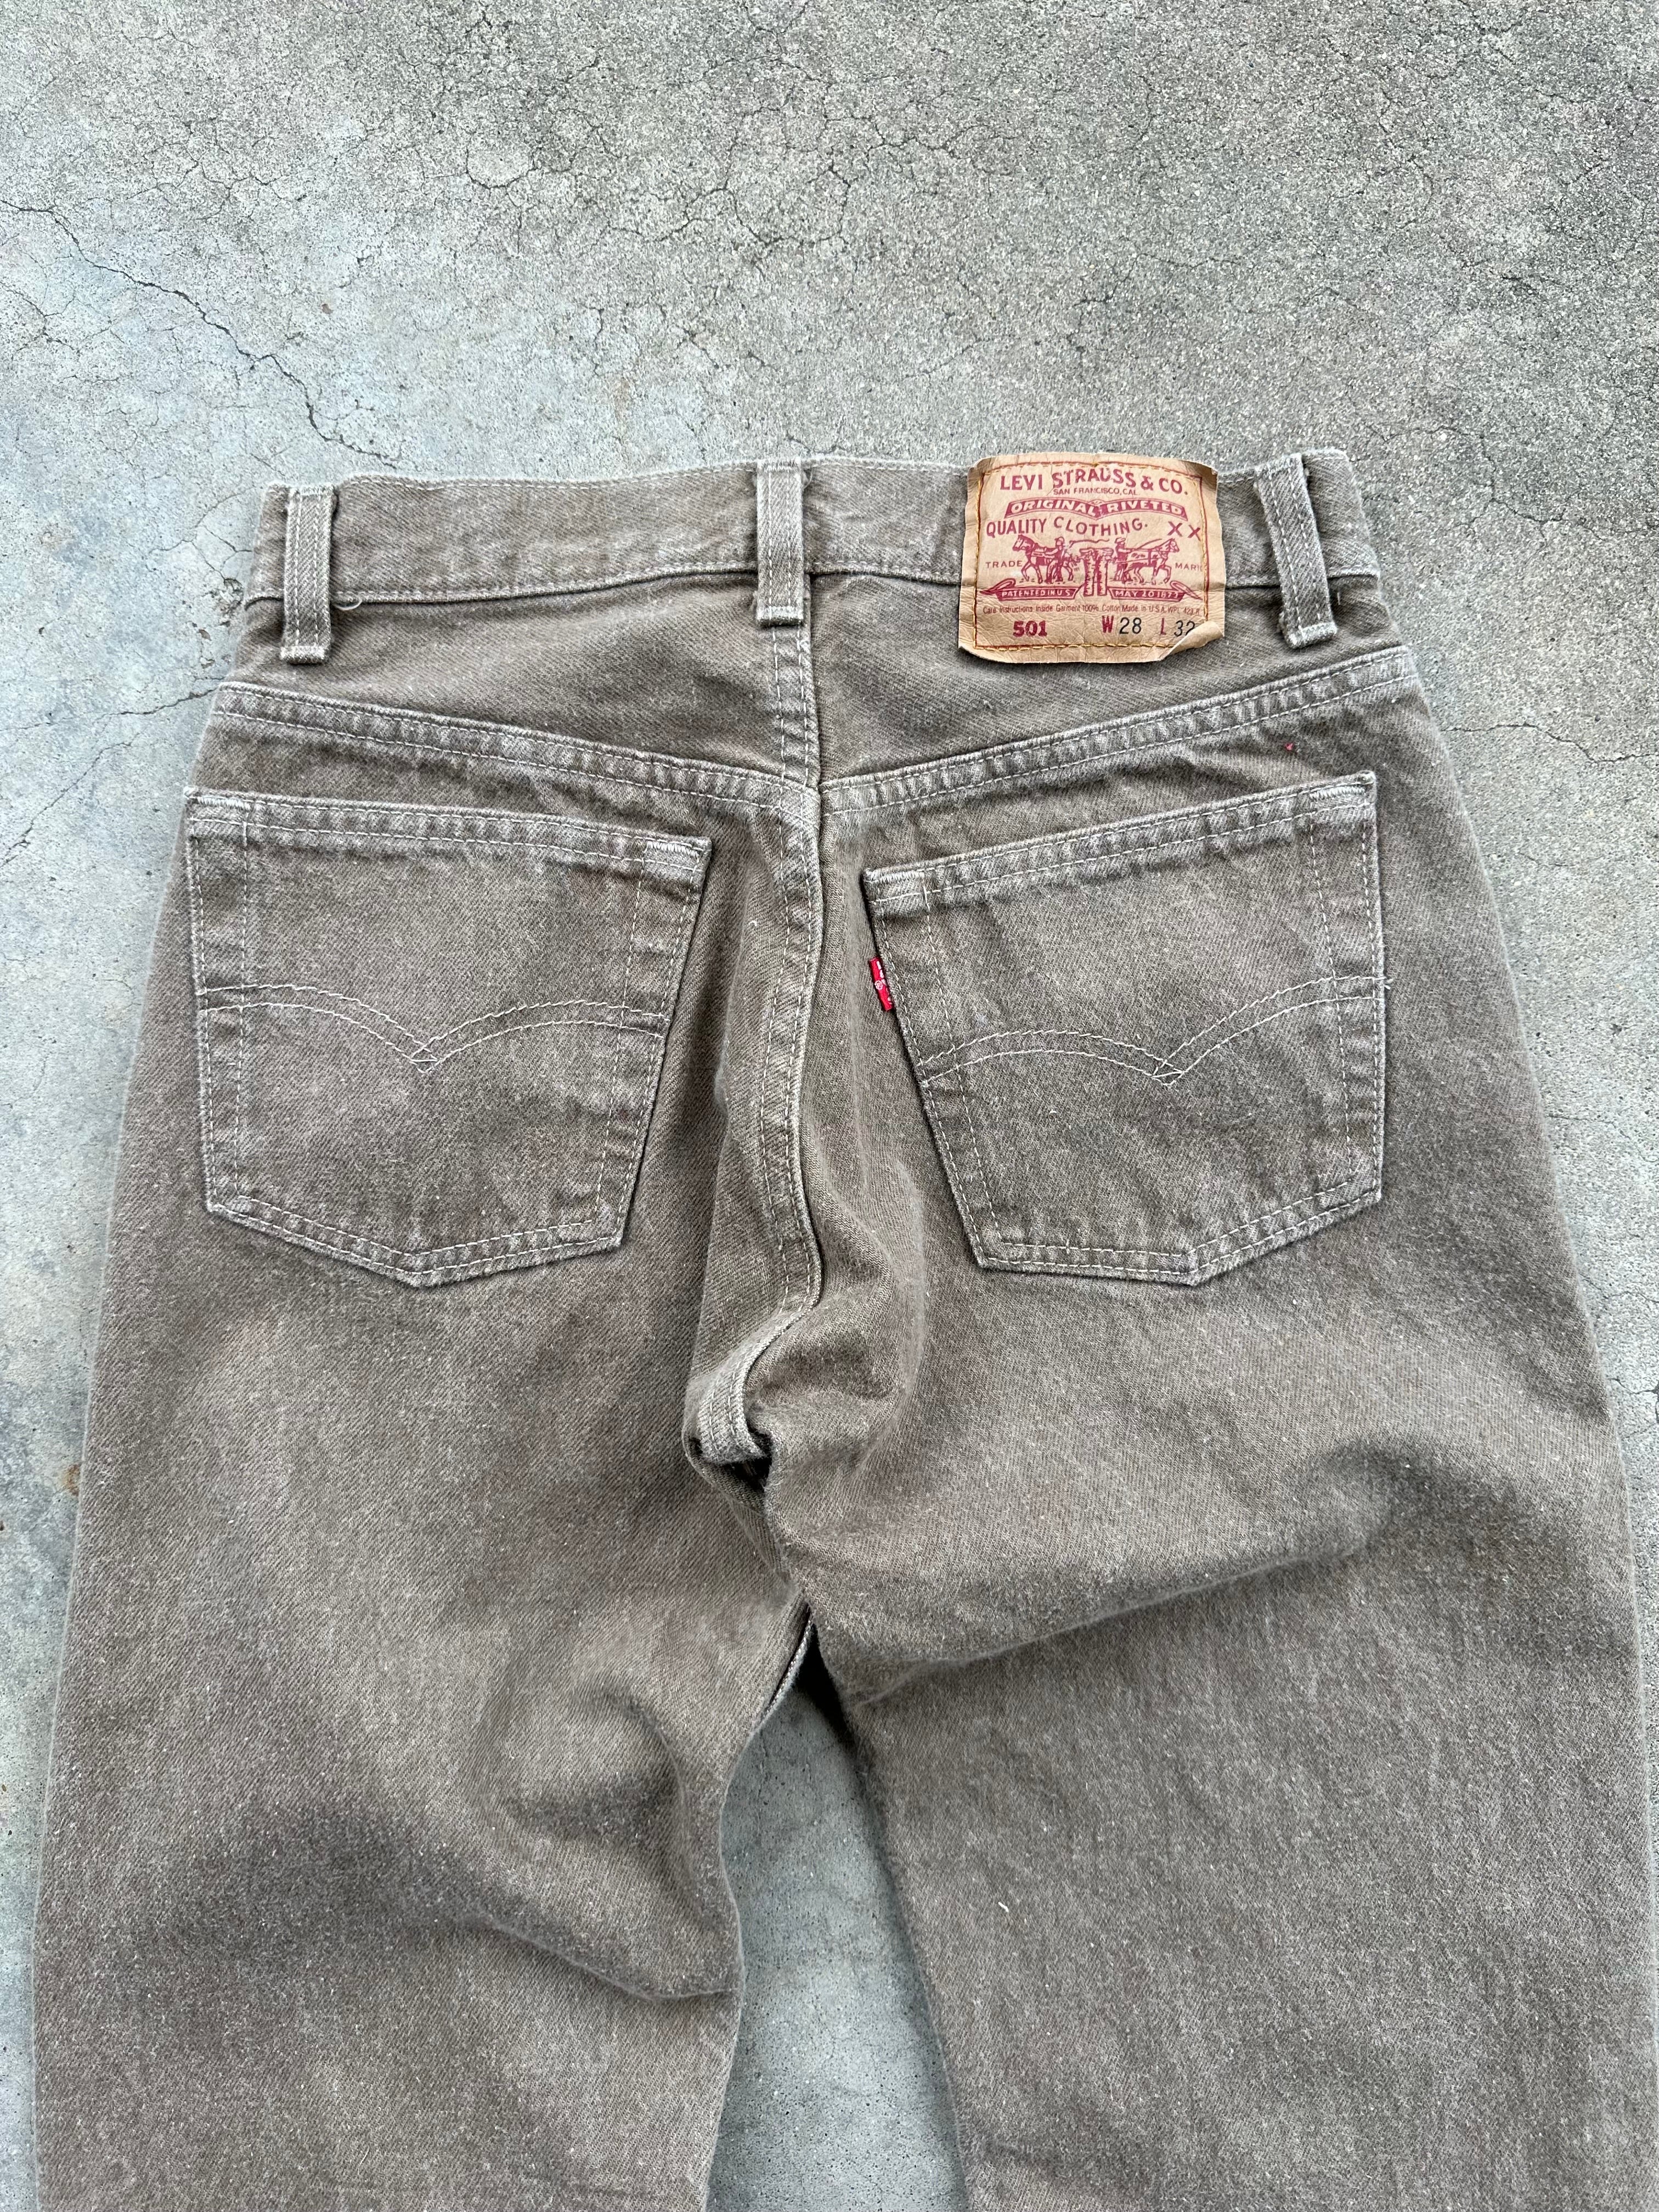 1990s Levi’s 501 Light Brown Jeans (26"x30.5")